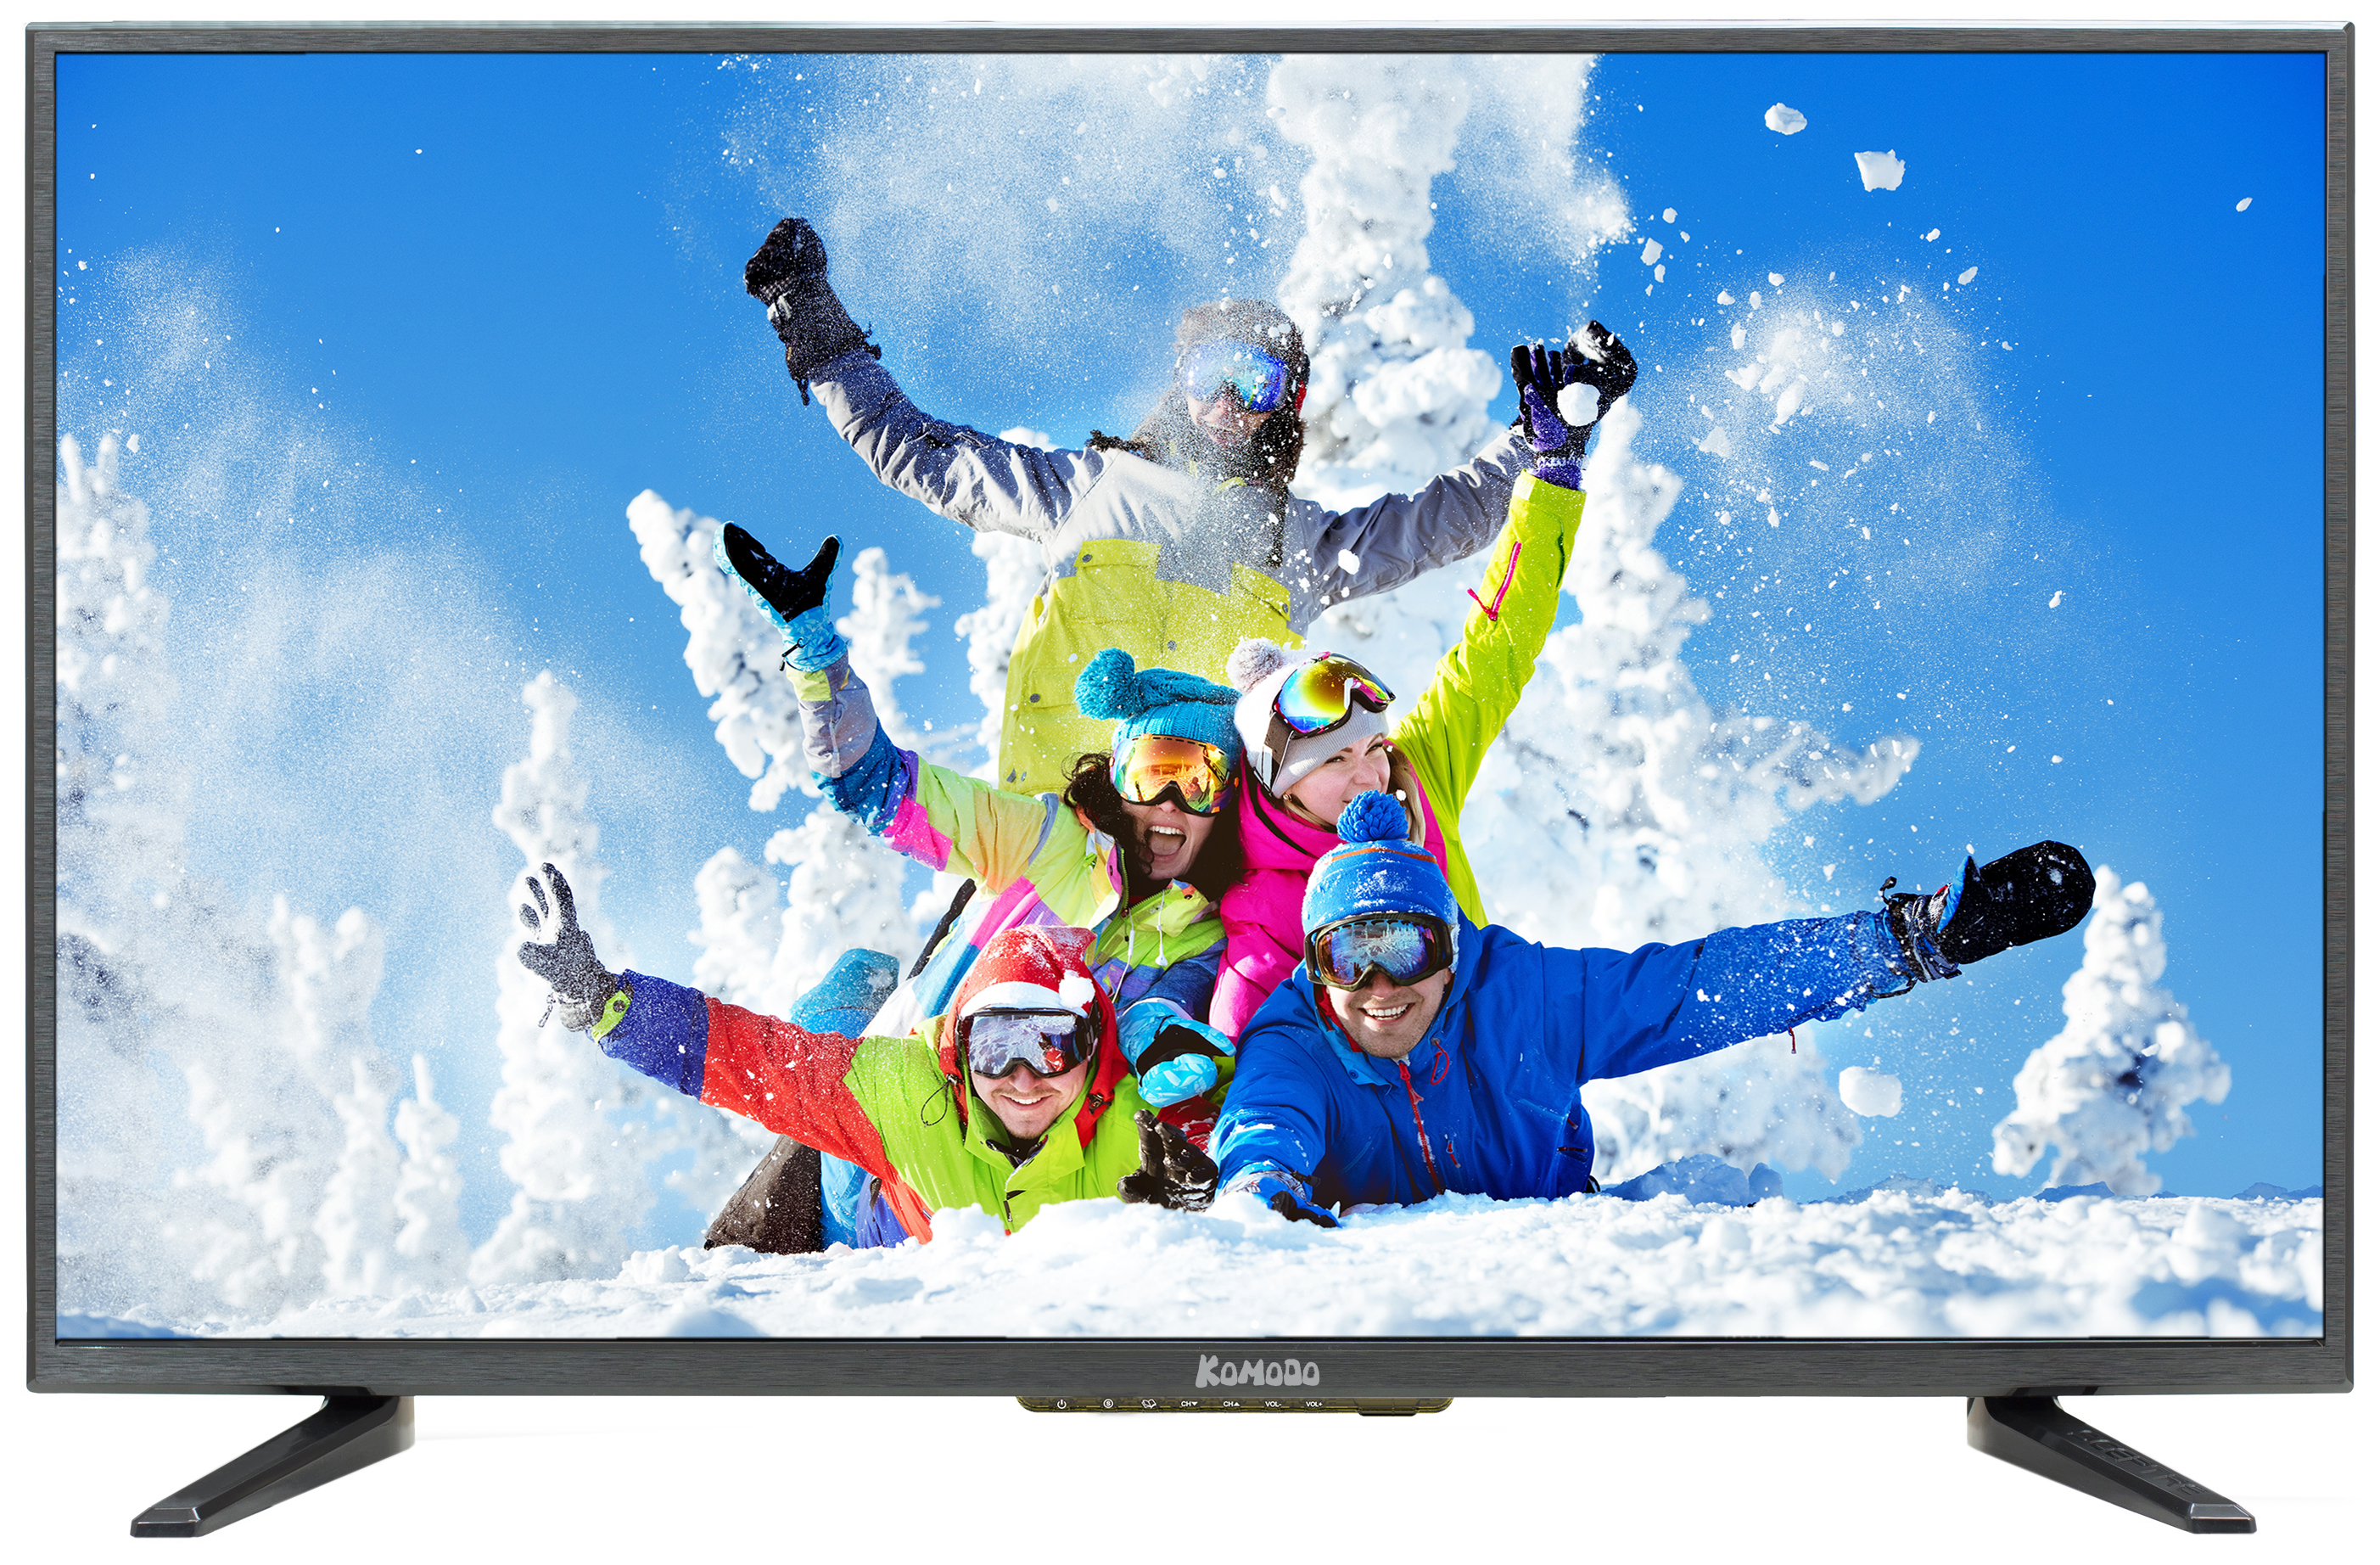 Komodo KX-322 32" 720p LED HDTV